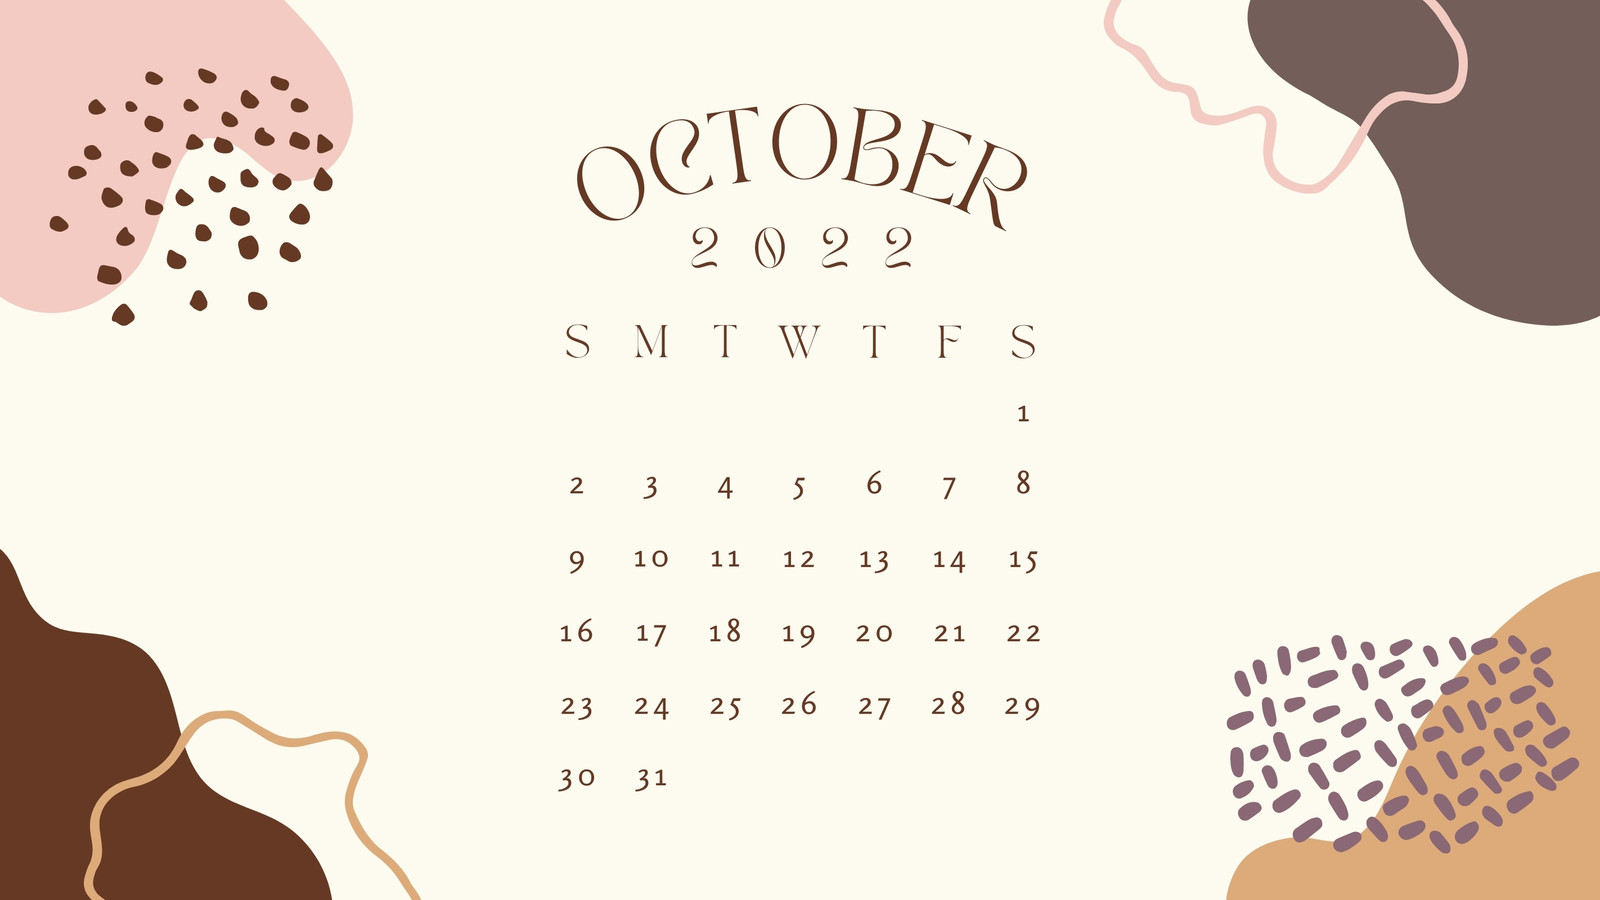 October 2022 Wallpaper Calendar Free Customizable Geometric Desktop Wallpaper Templates | Canva